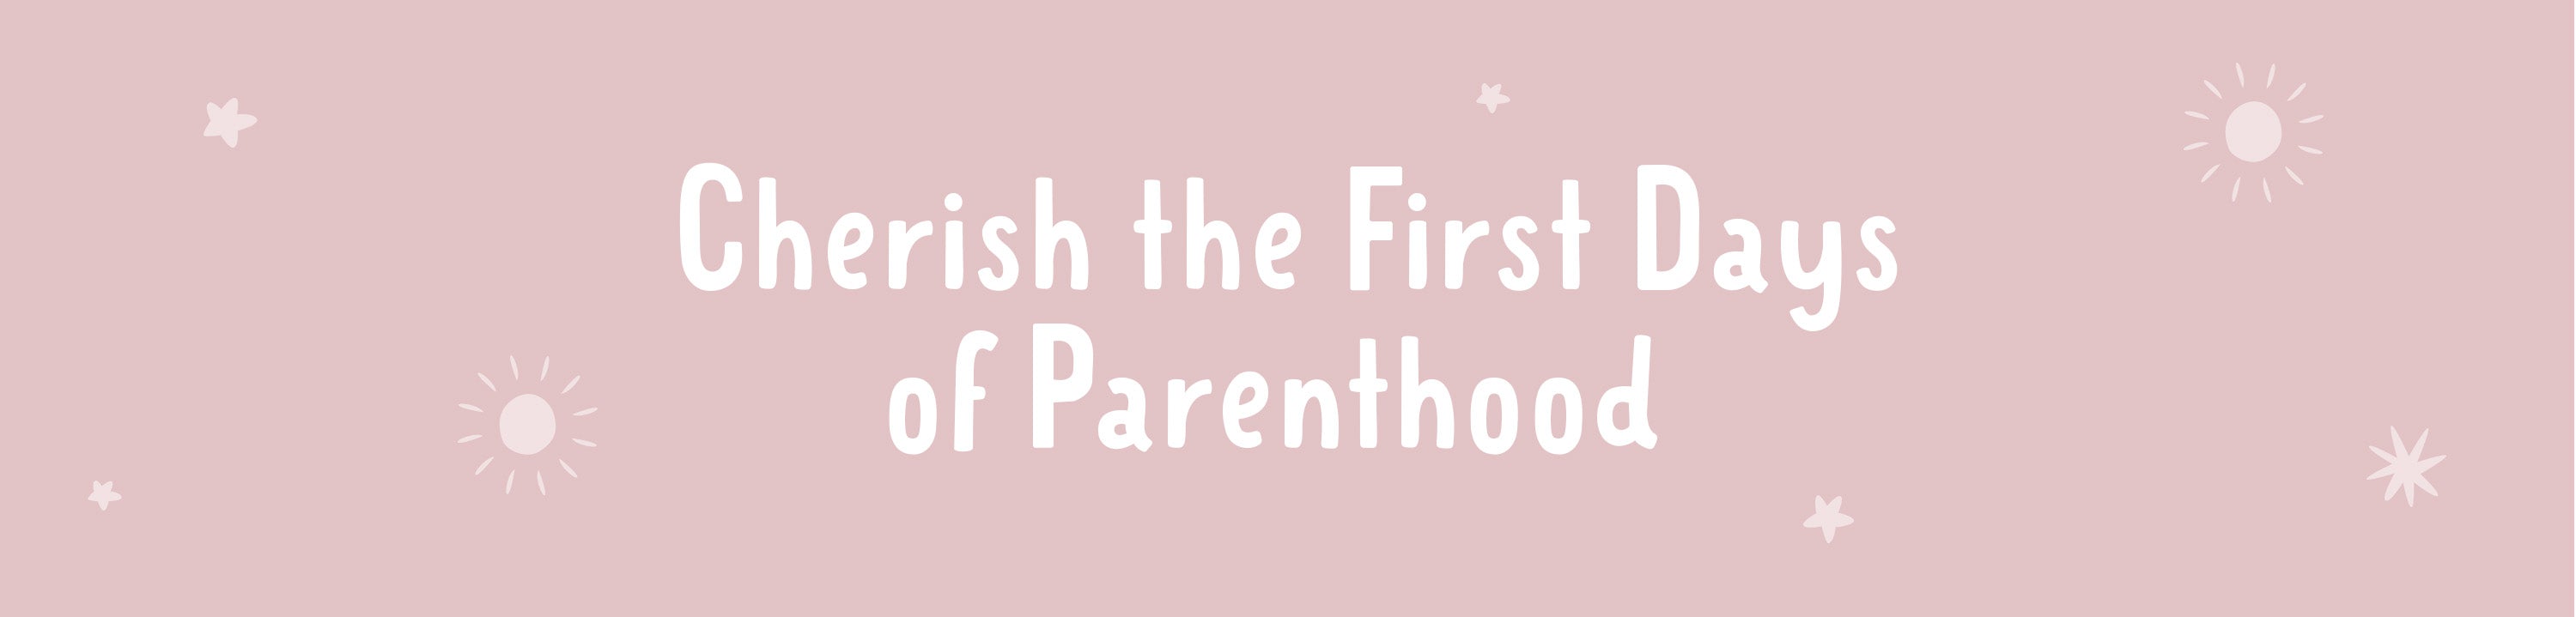 Cherish the first days of parenthood